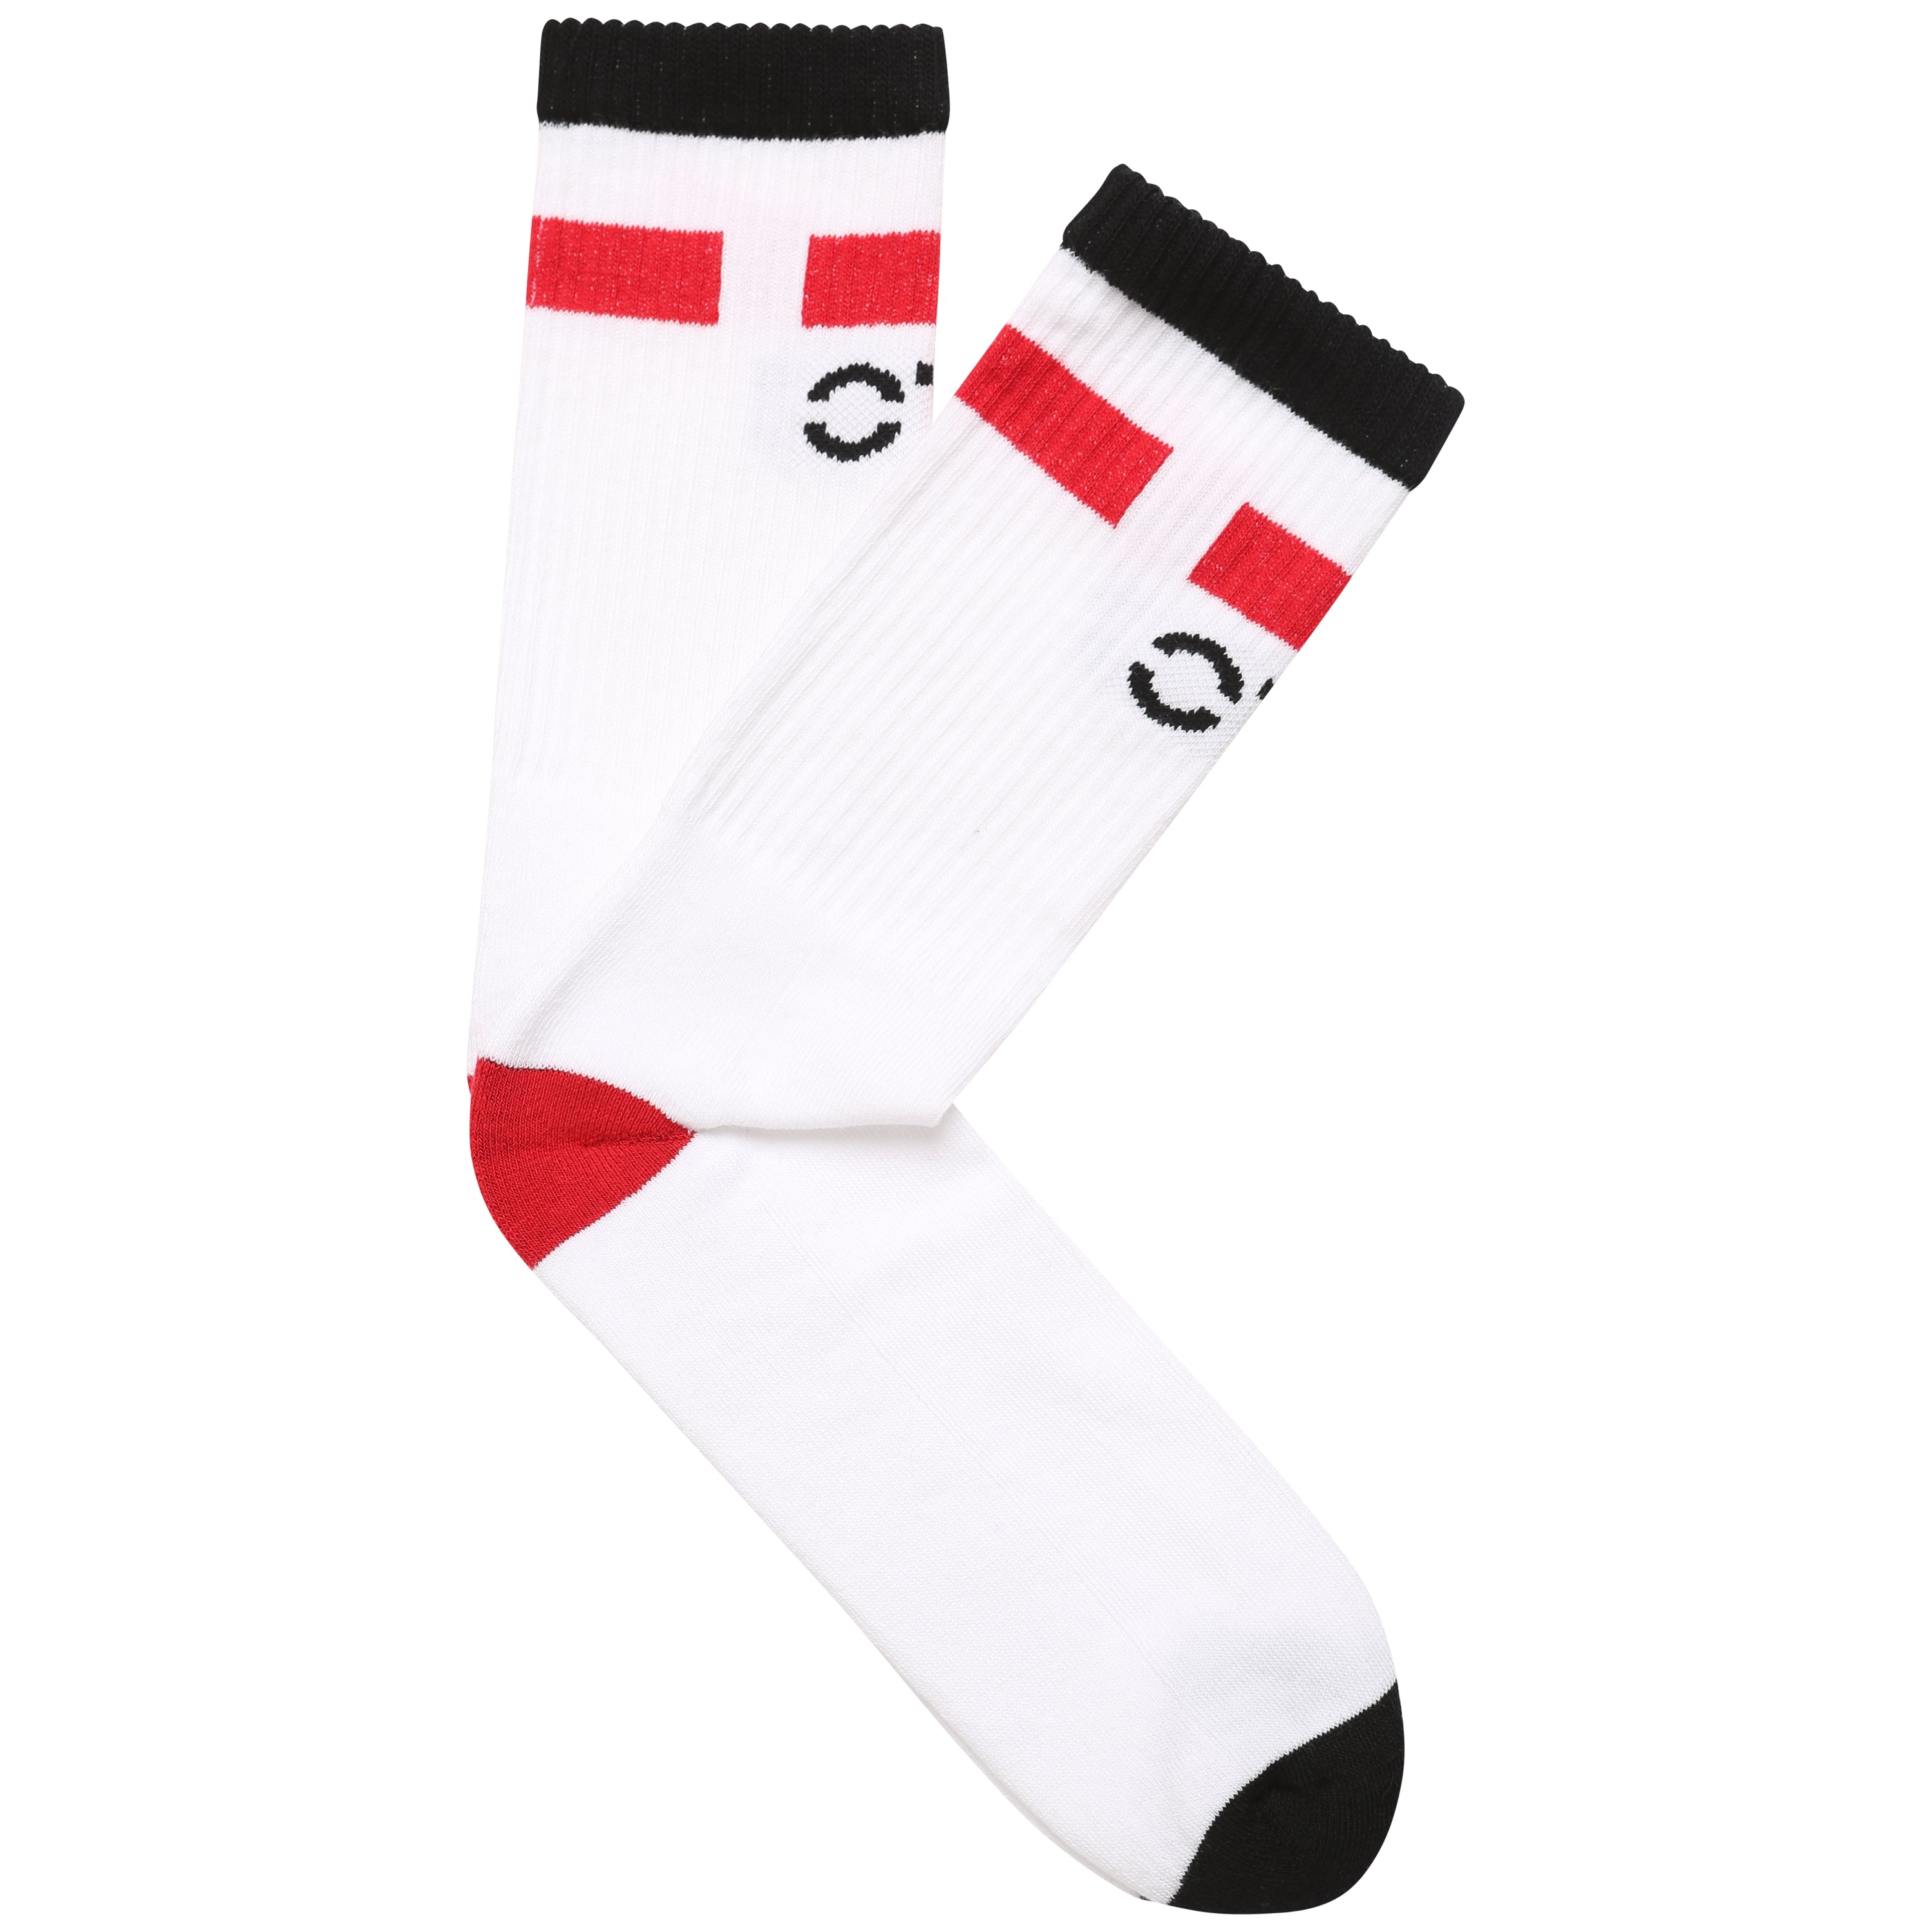 white socks for sneakers streetwear OTB branded red black